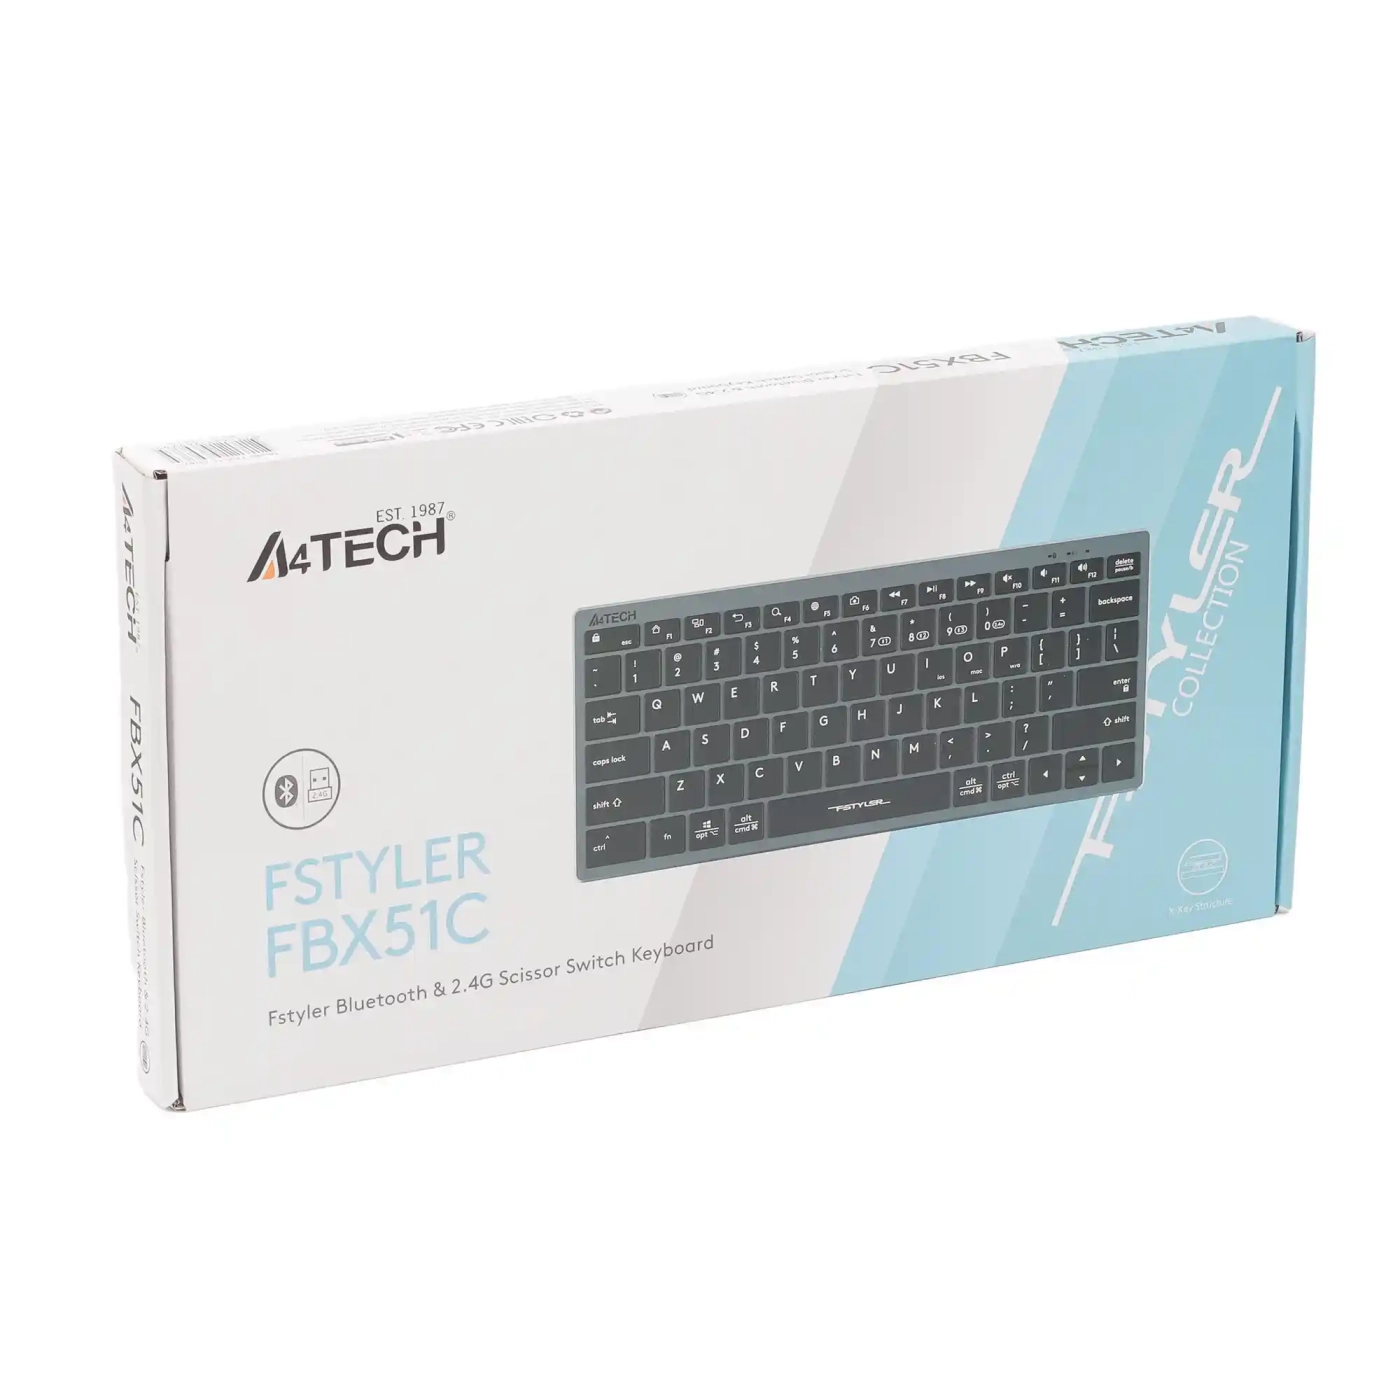 Купить Клавиатура A4Tech Fstyler FBX51C Grey - фото 7